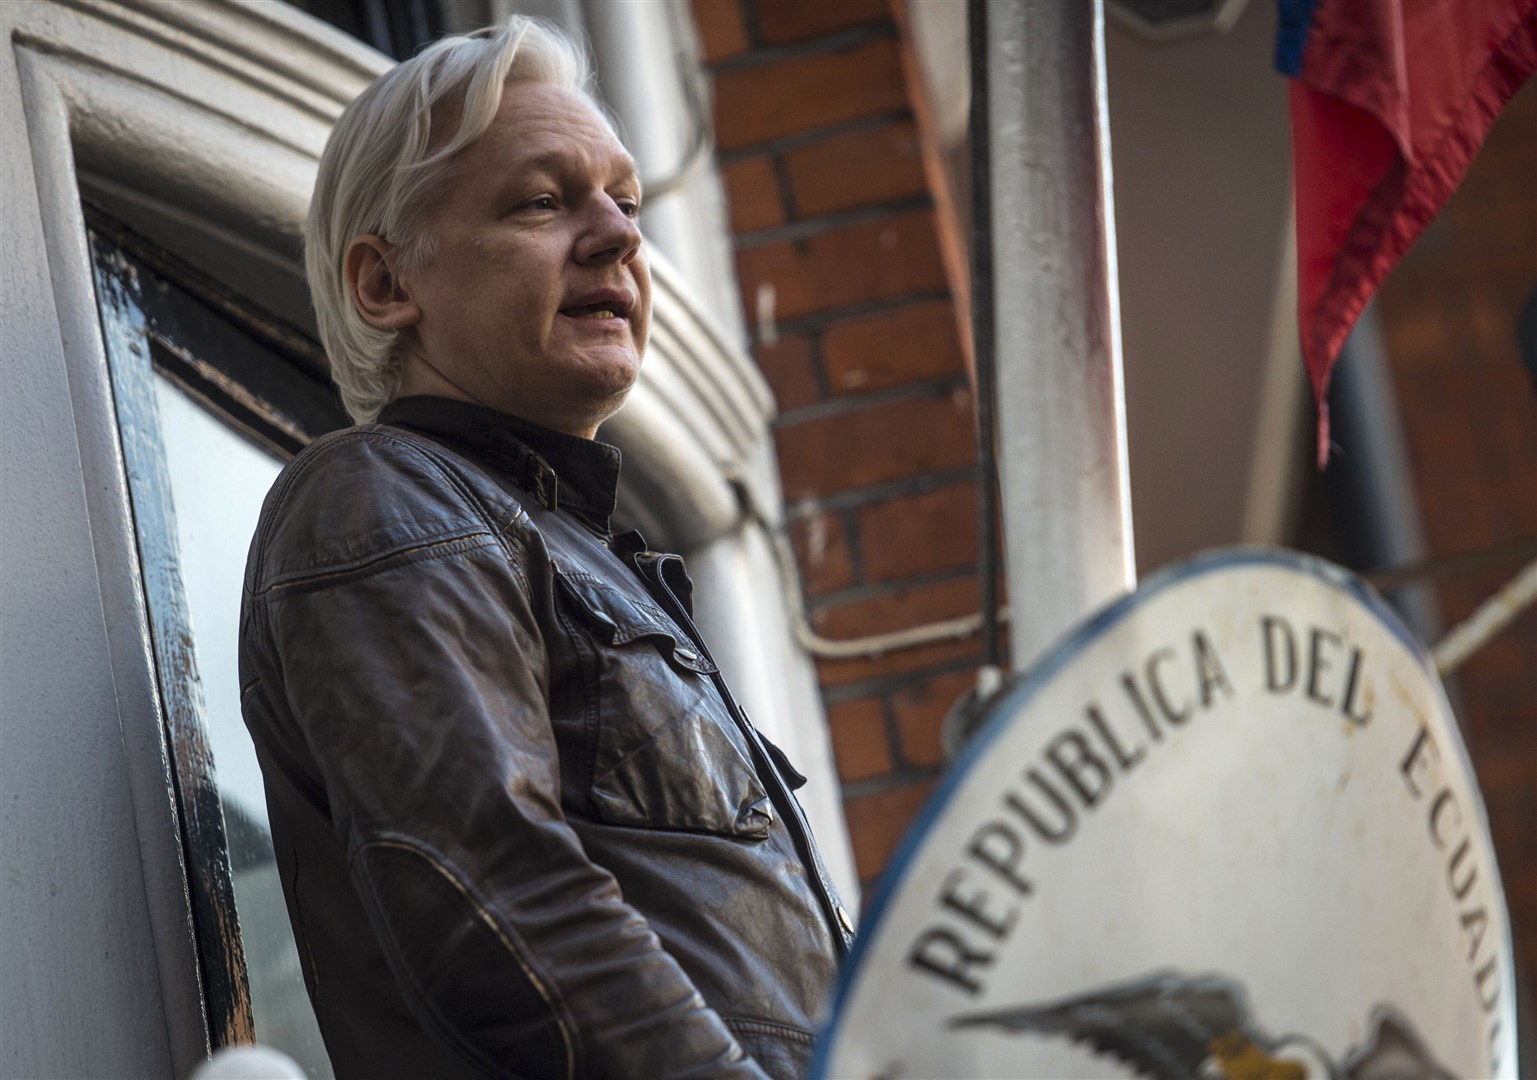 Julian Assange speaks from the balcony of the Ecuadorian embassy in London (Lauren Hurley/PA)